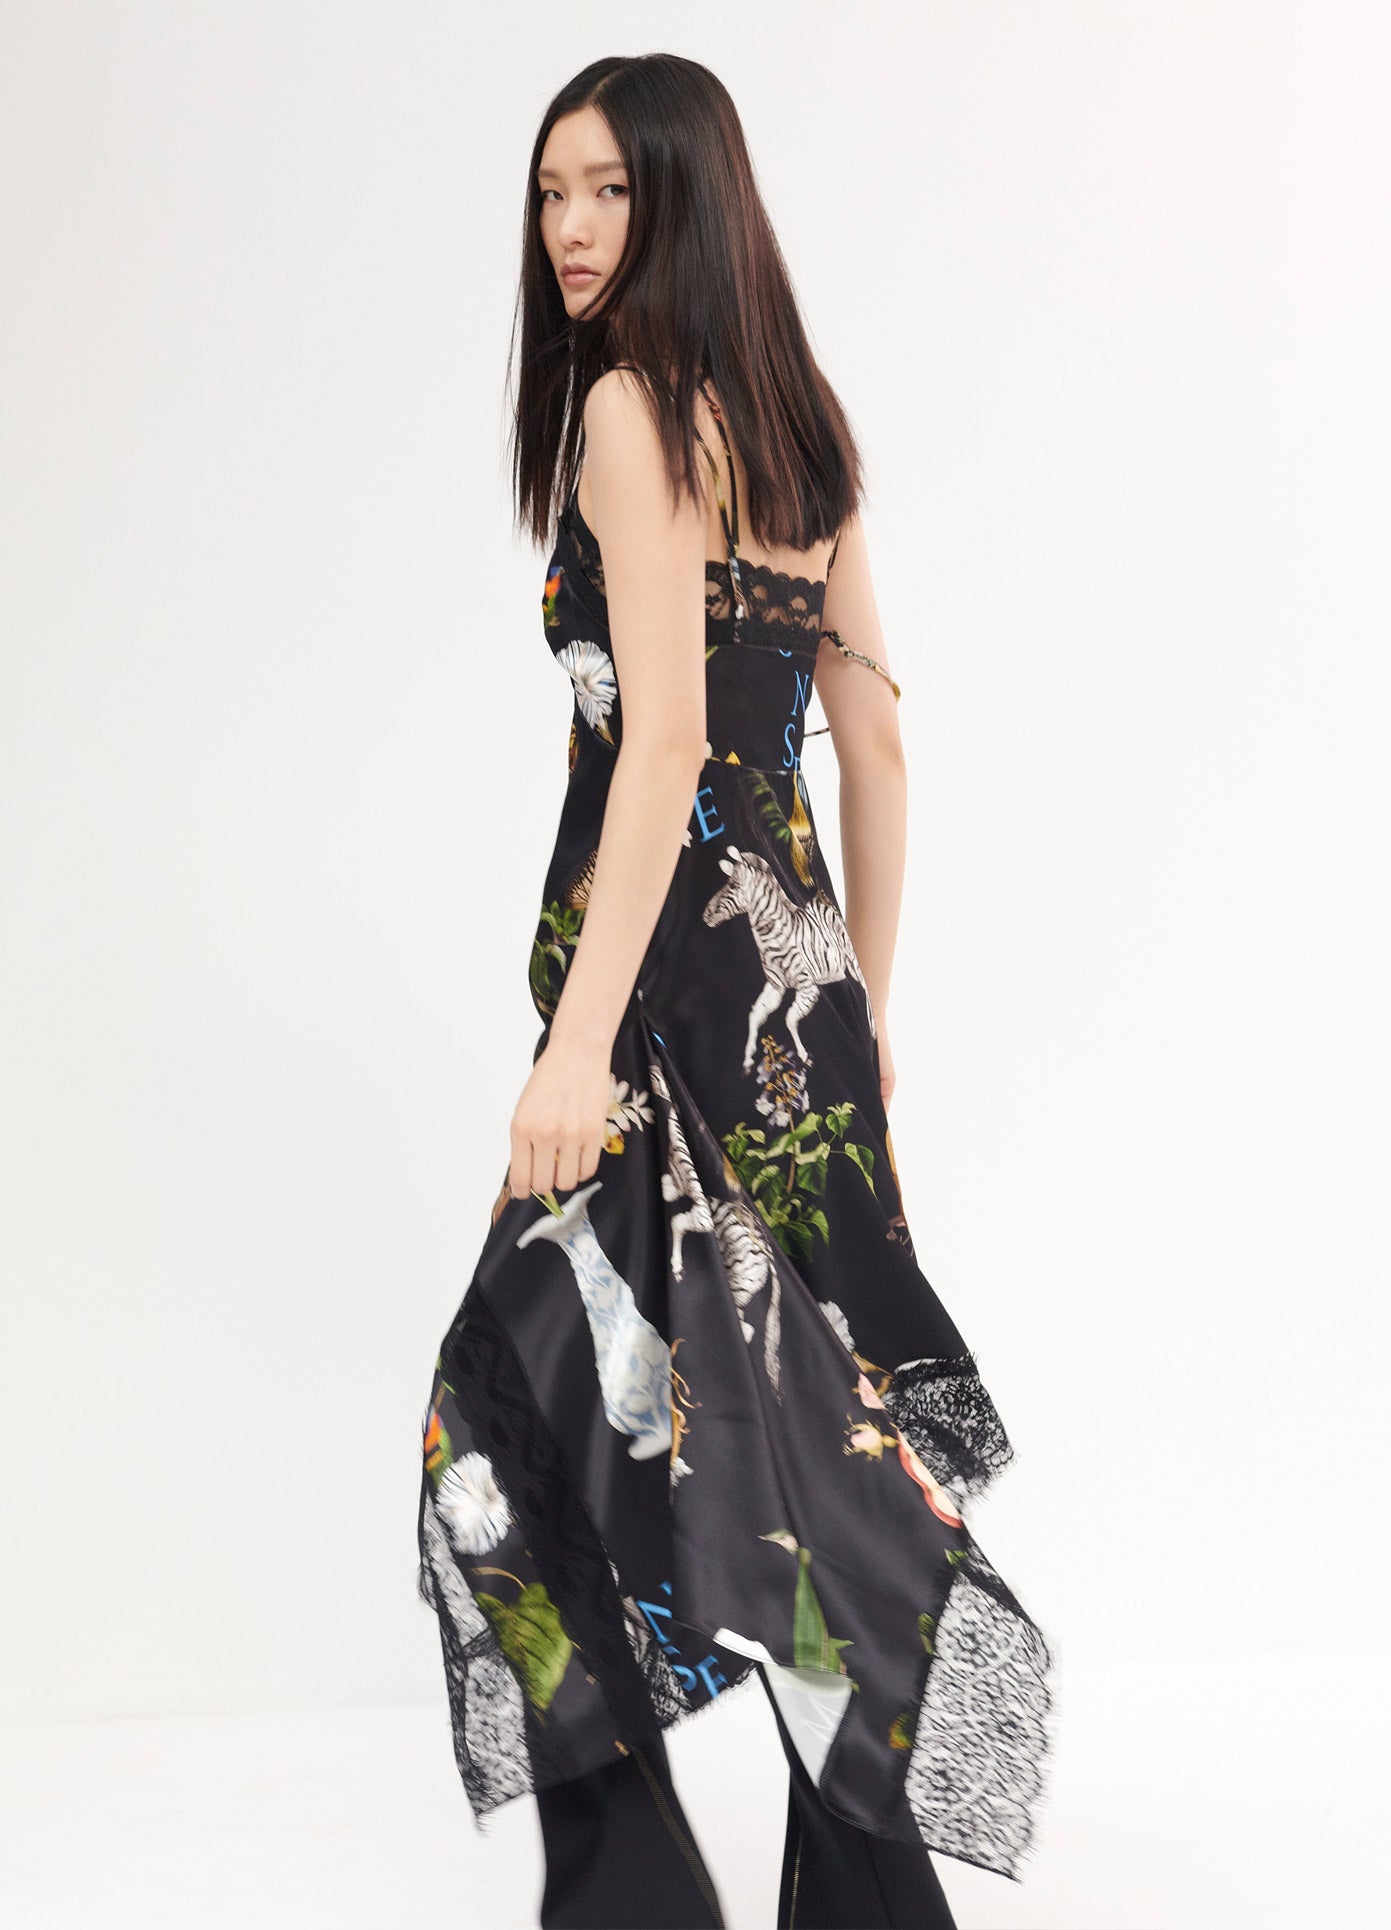 MONSE Print Lace Slip Dress in Black Multi on Model Looking Back Side View